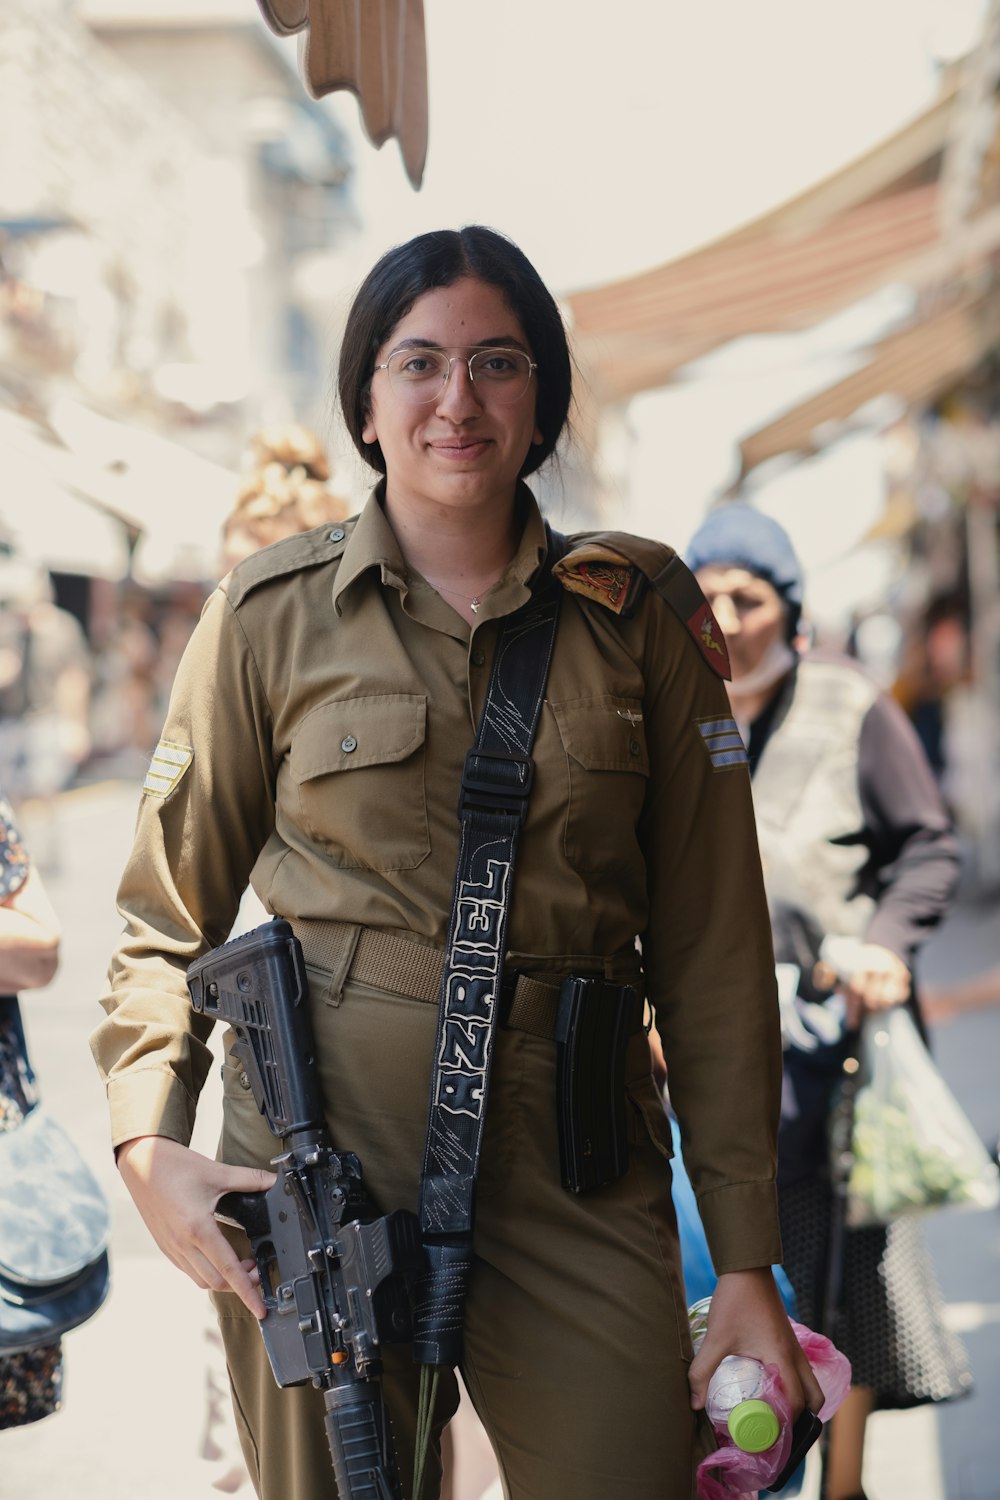 a woman in a uniform is holding a gun